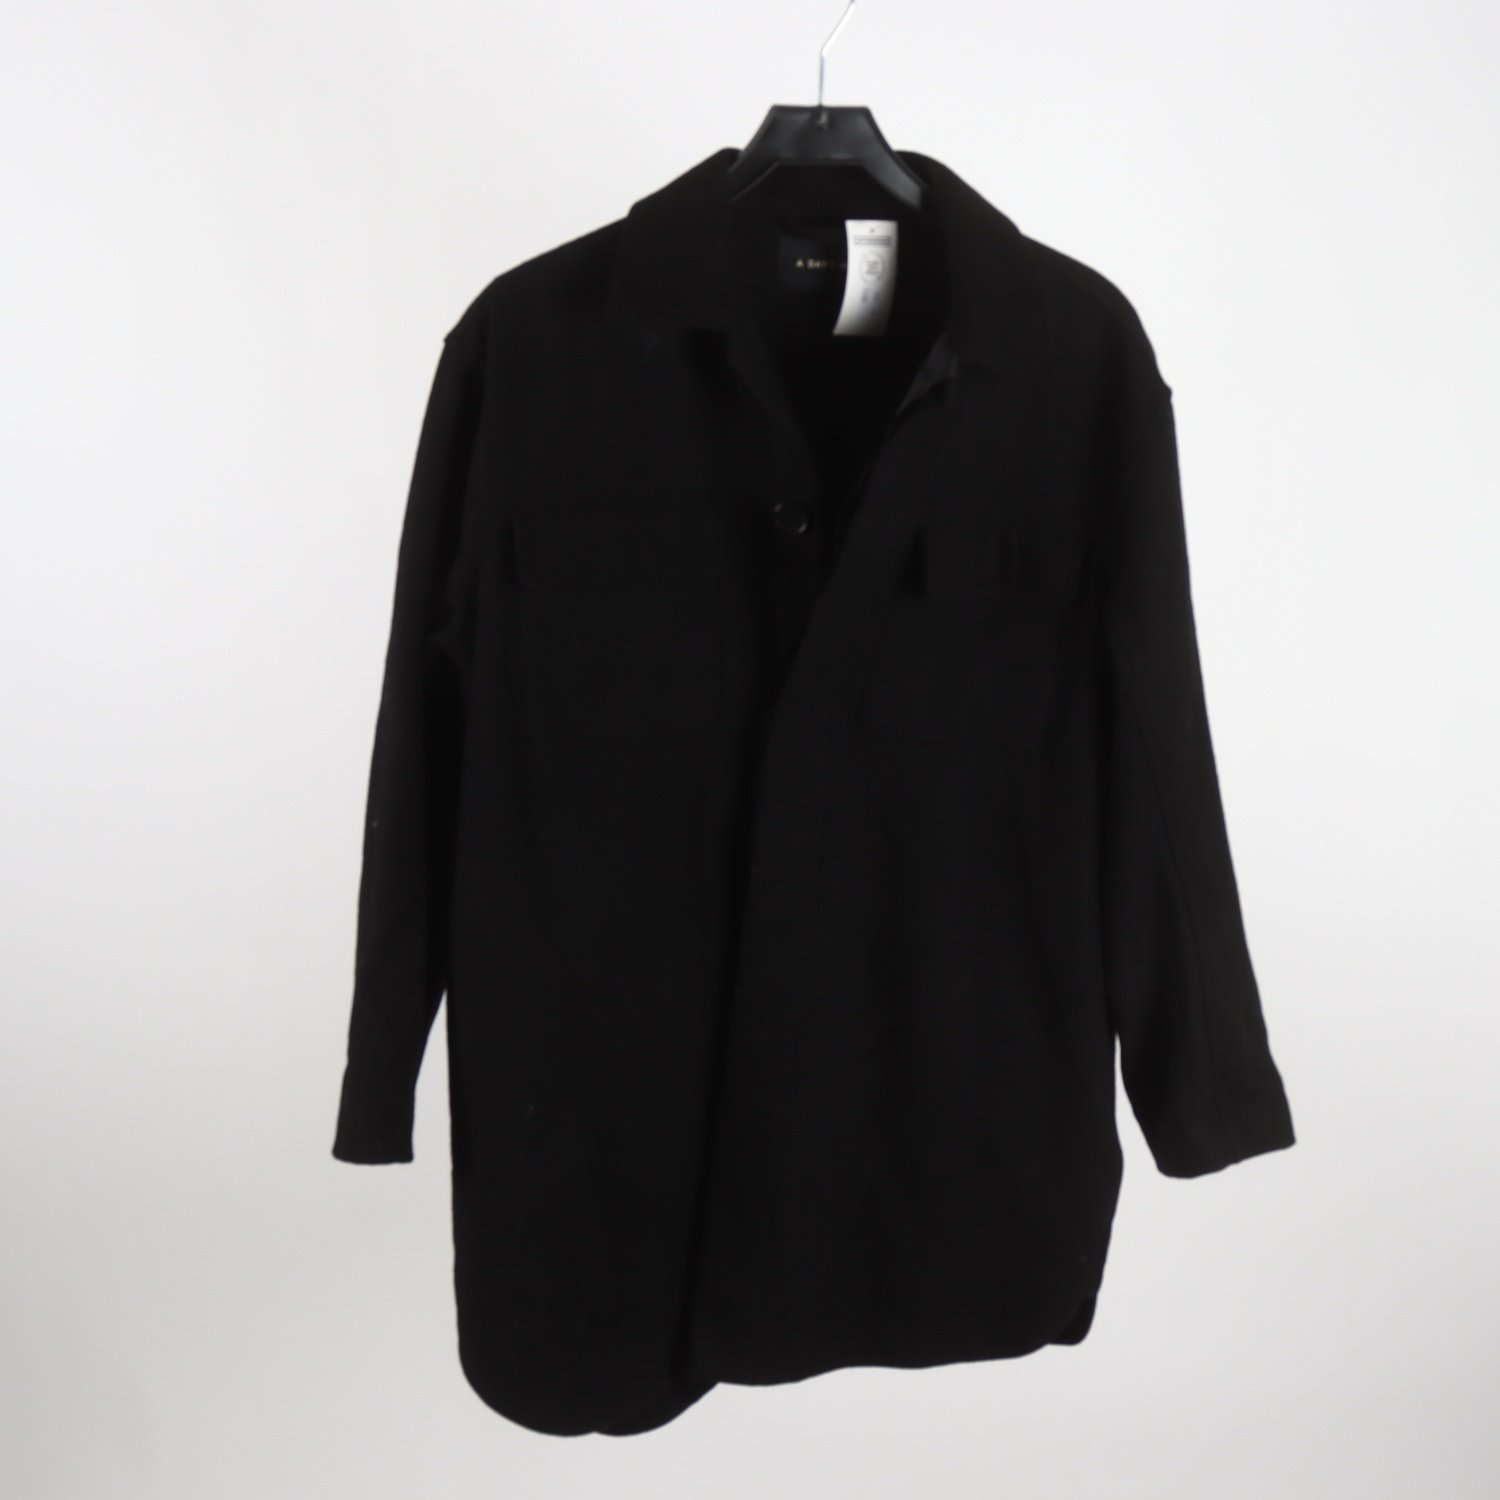 Skjortjacka, A Day´s March, svart, ull, stl. 36